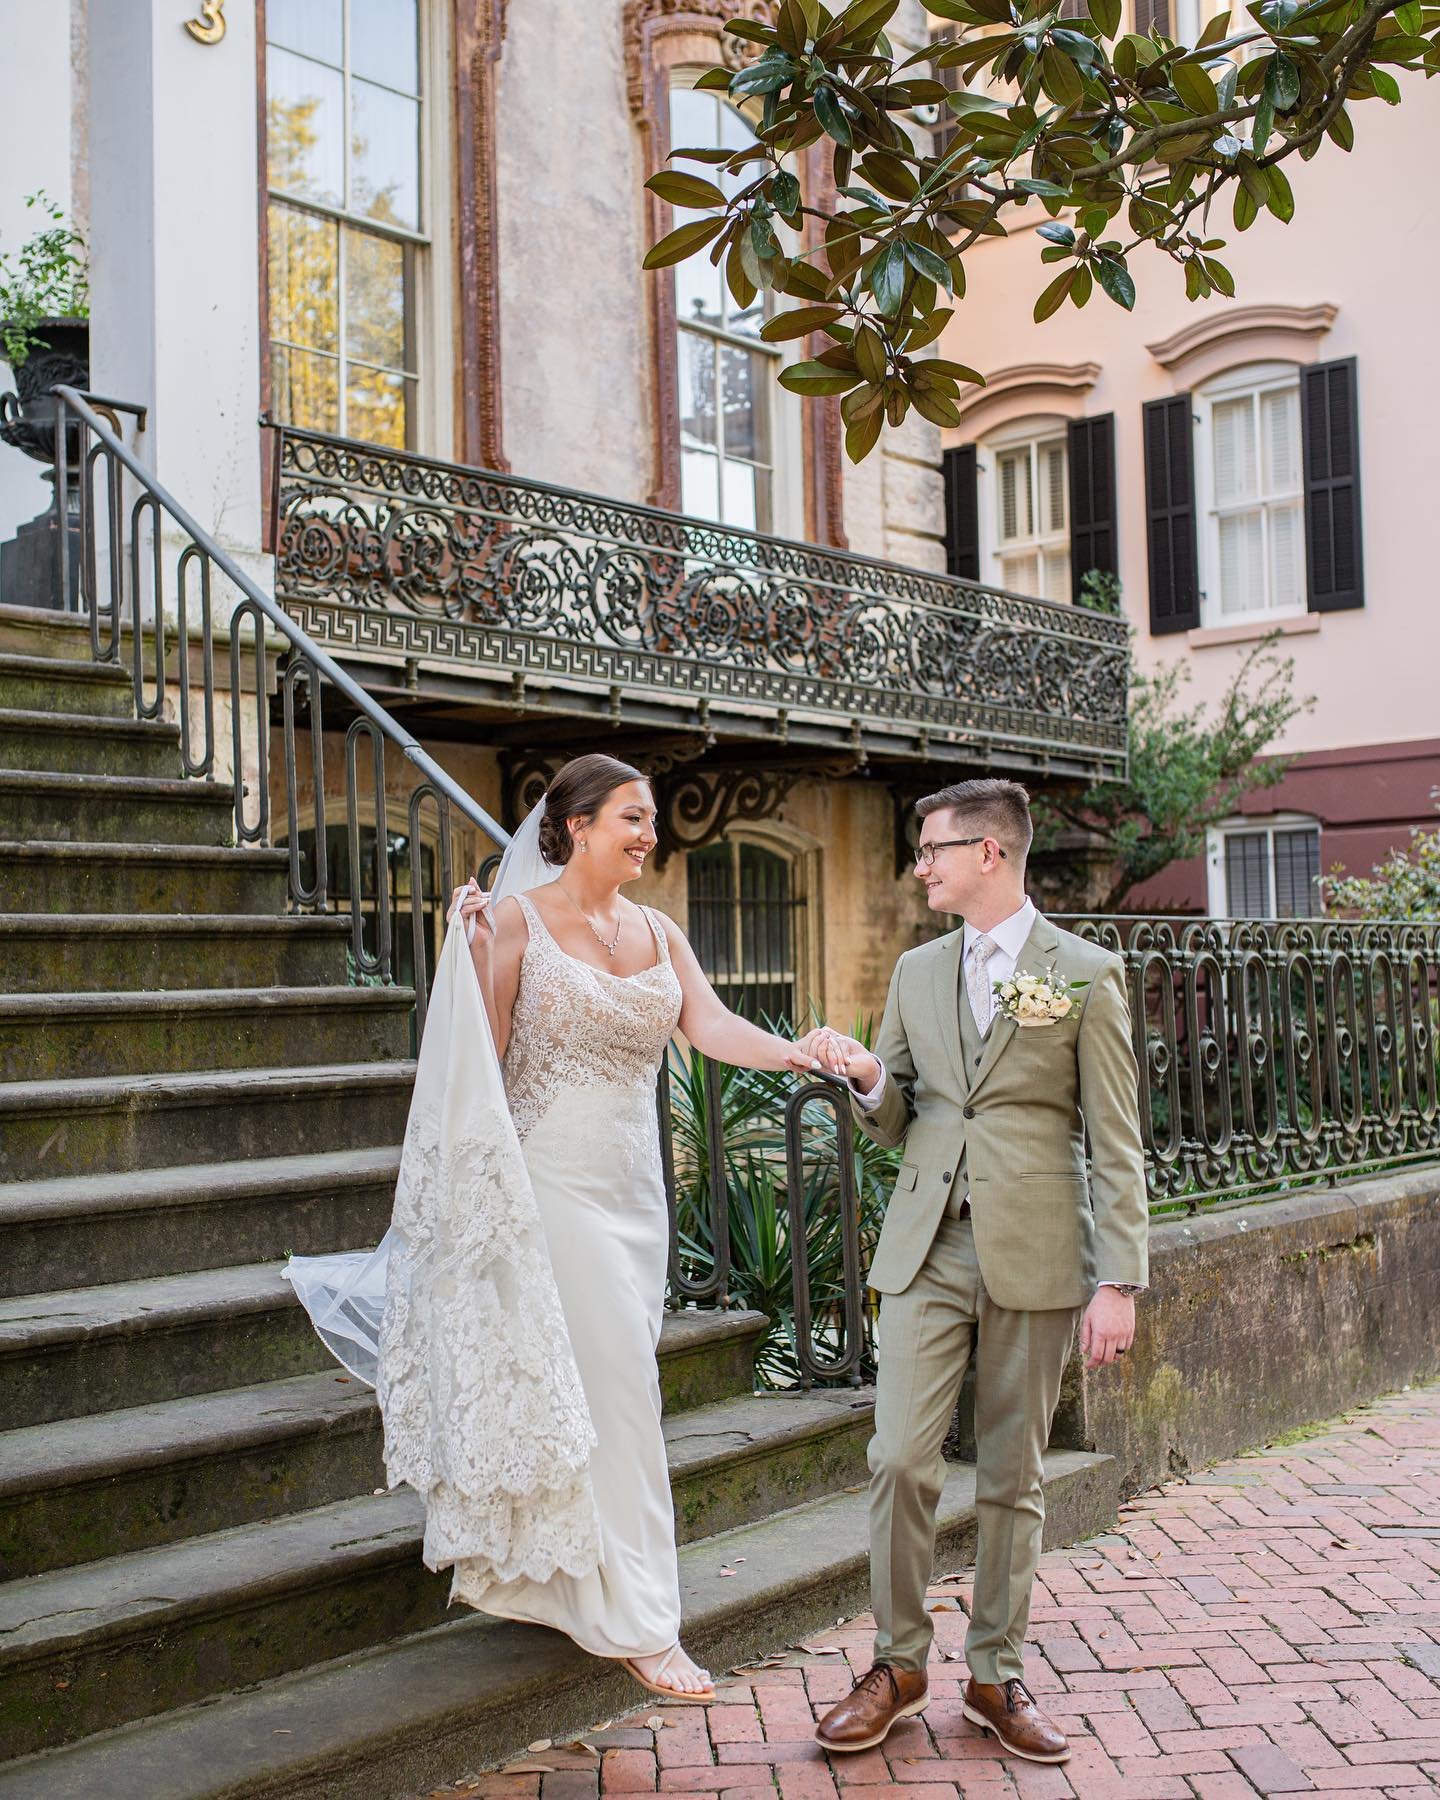 A classic Savannah wedding with Morgan + Kyle ✨